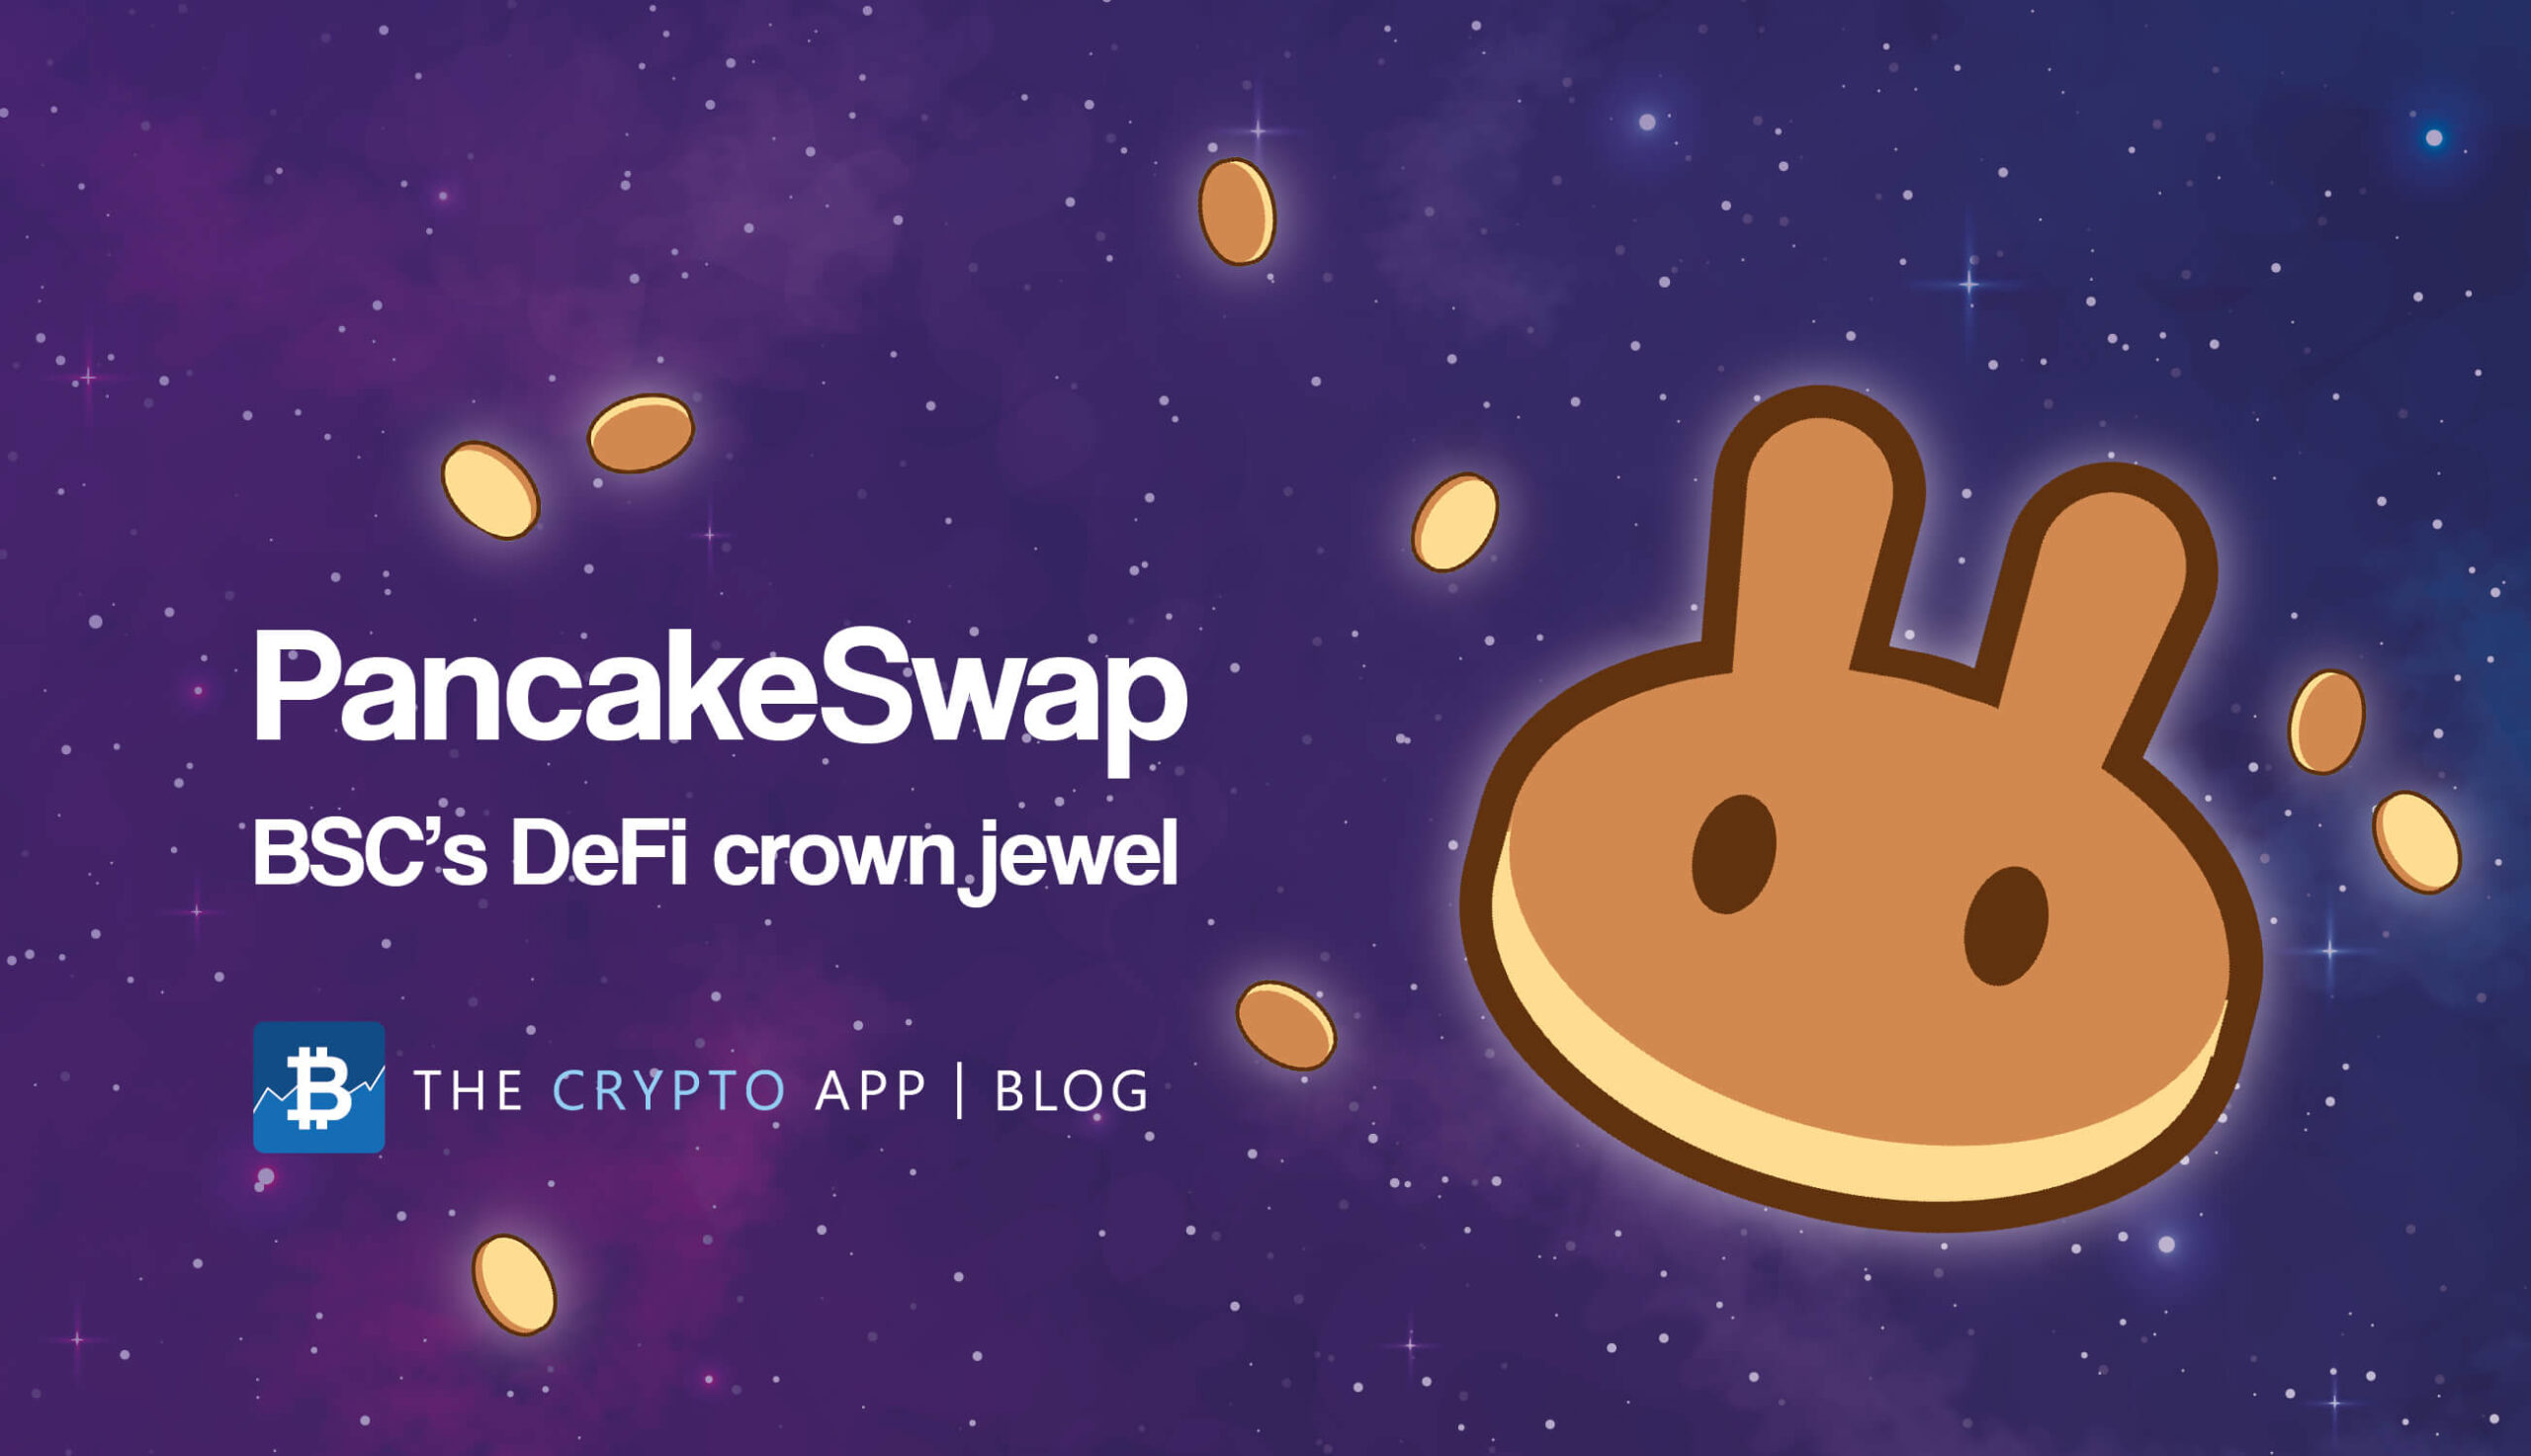 PancakeSwap: BSC’s DeFi crown jewel